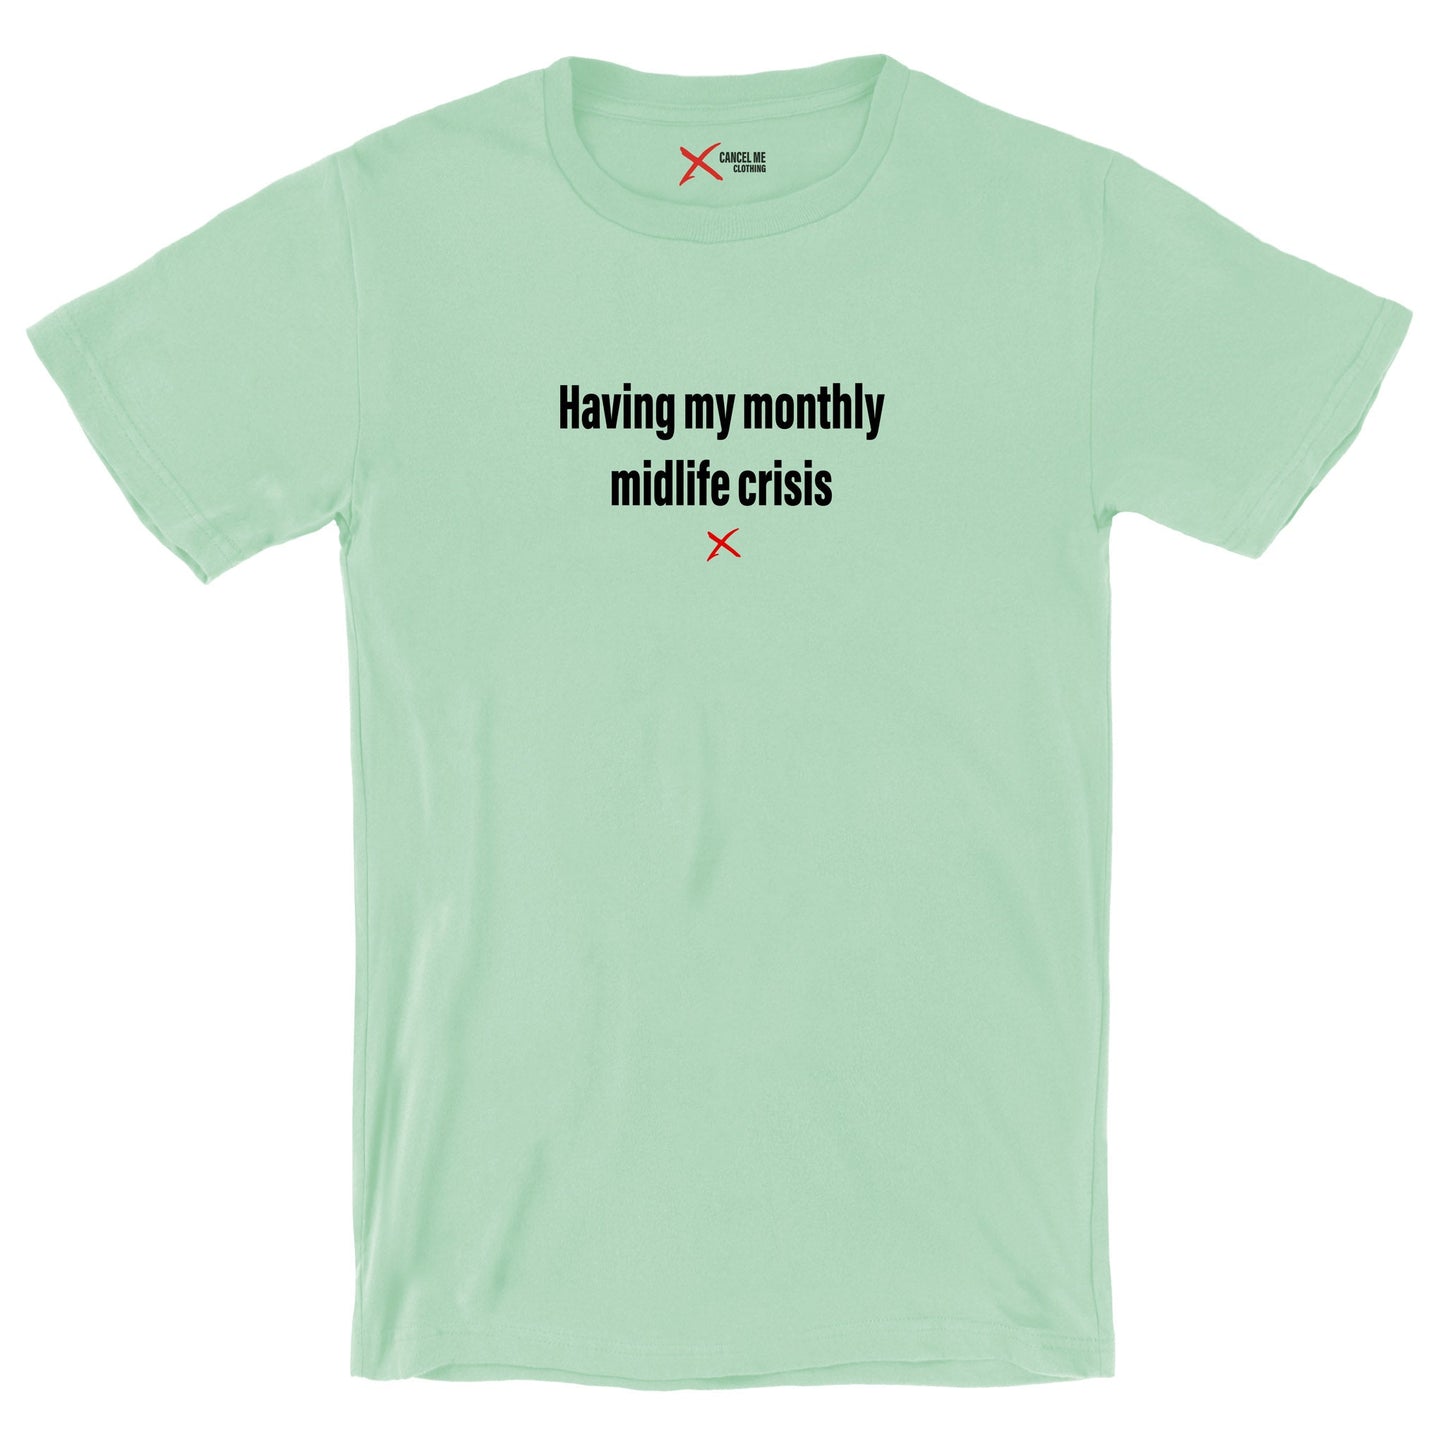 Having my monthly midlife crisis - Shirt